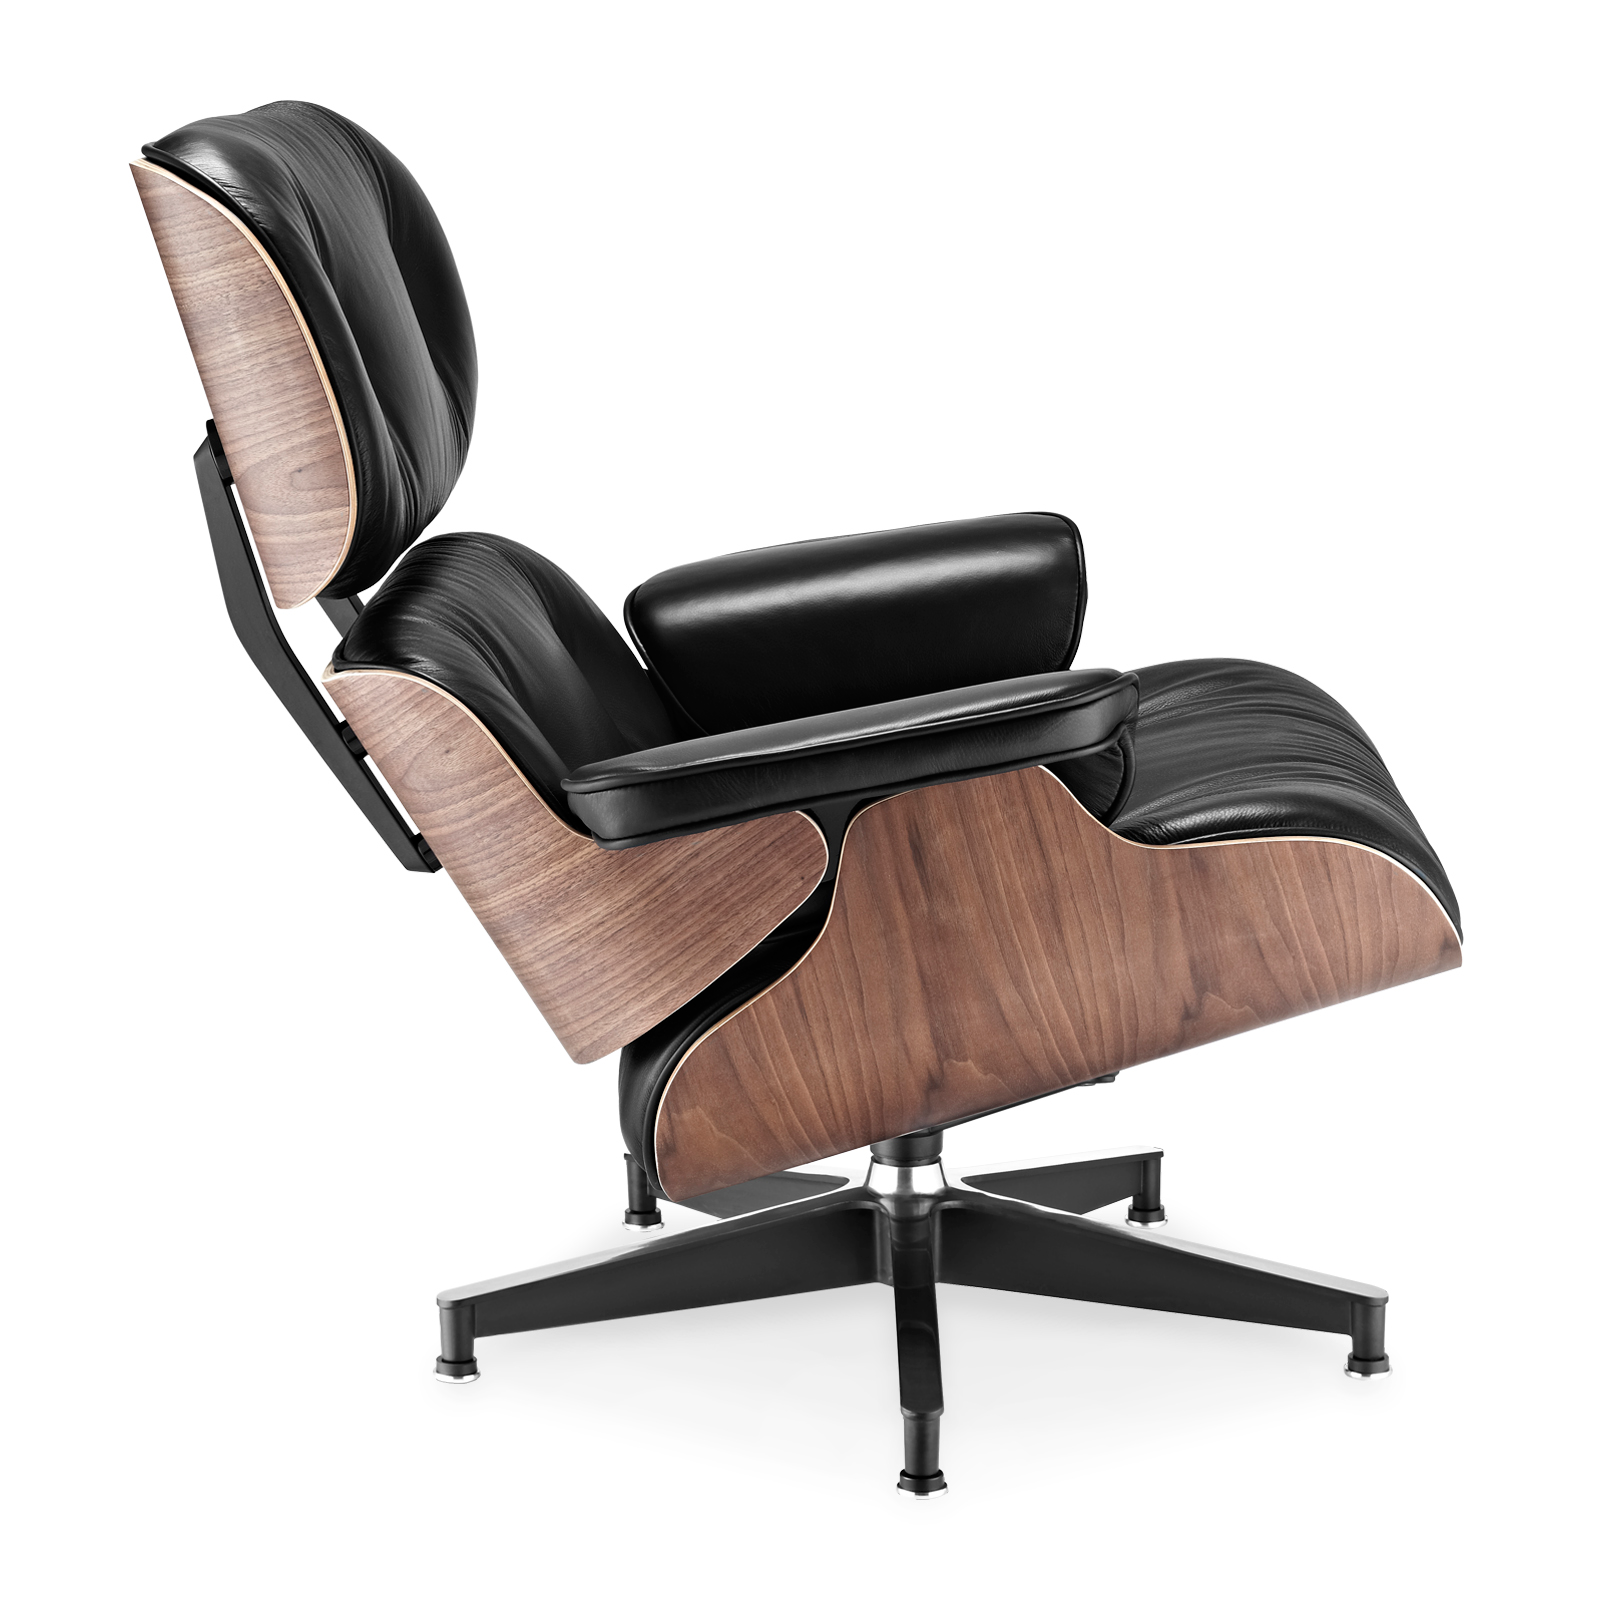 Avail a royal Charles Eames Lounge Chair